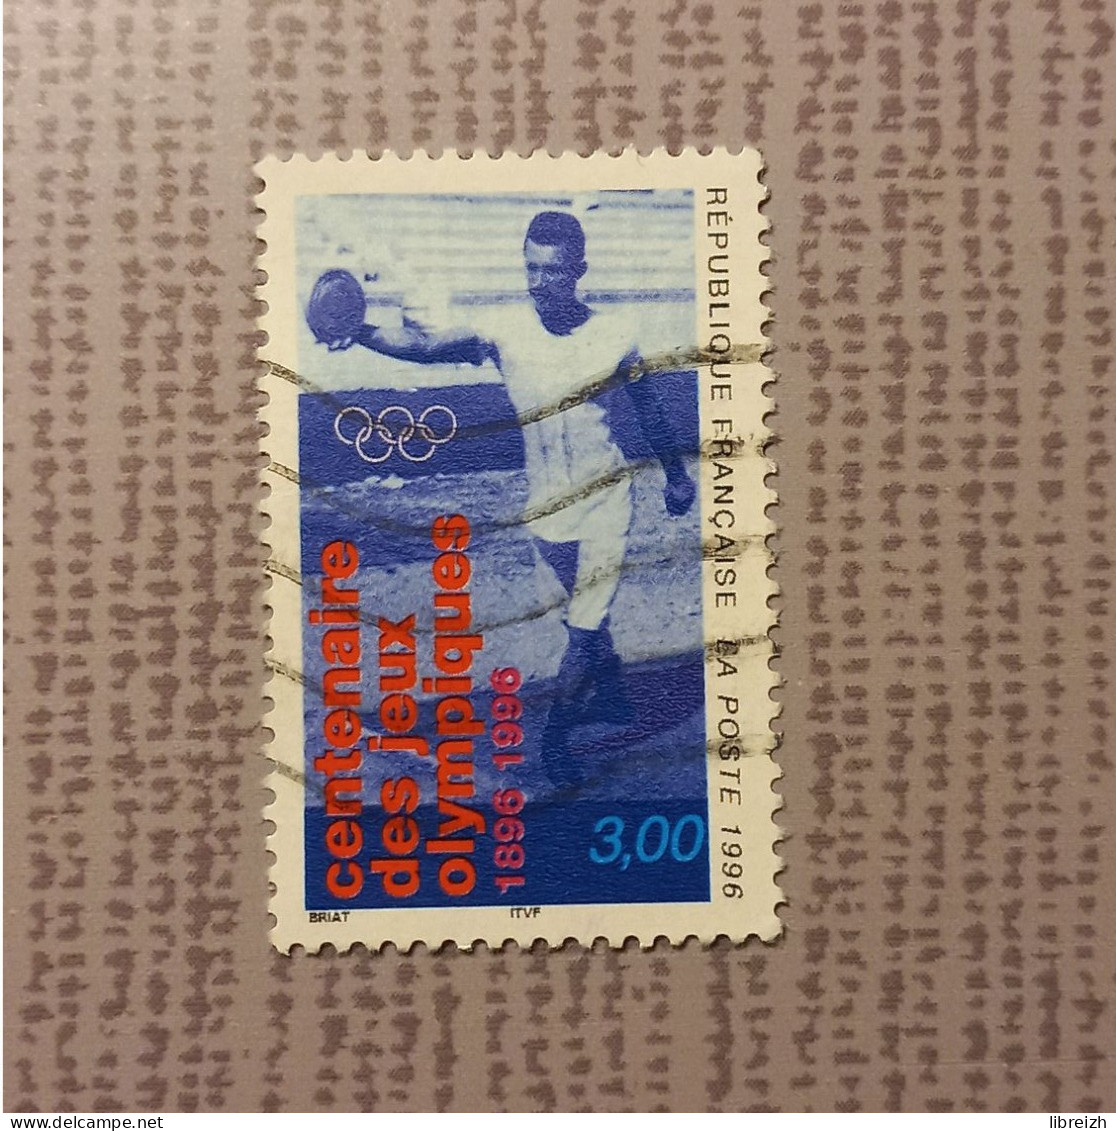 Lancer De Disque  N° 3016 Année 1996 - Used Stamps